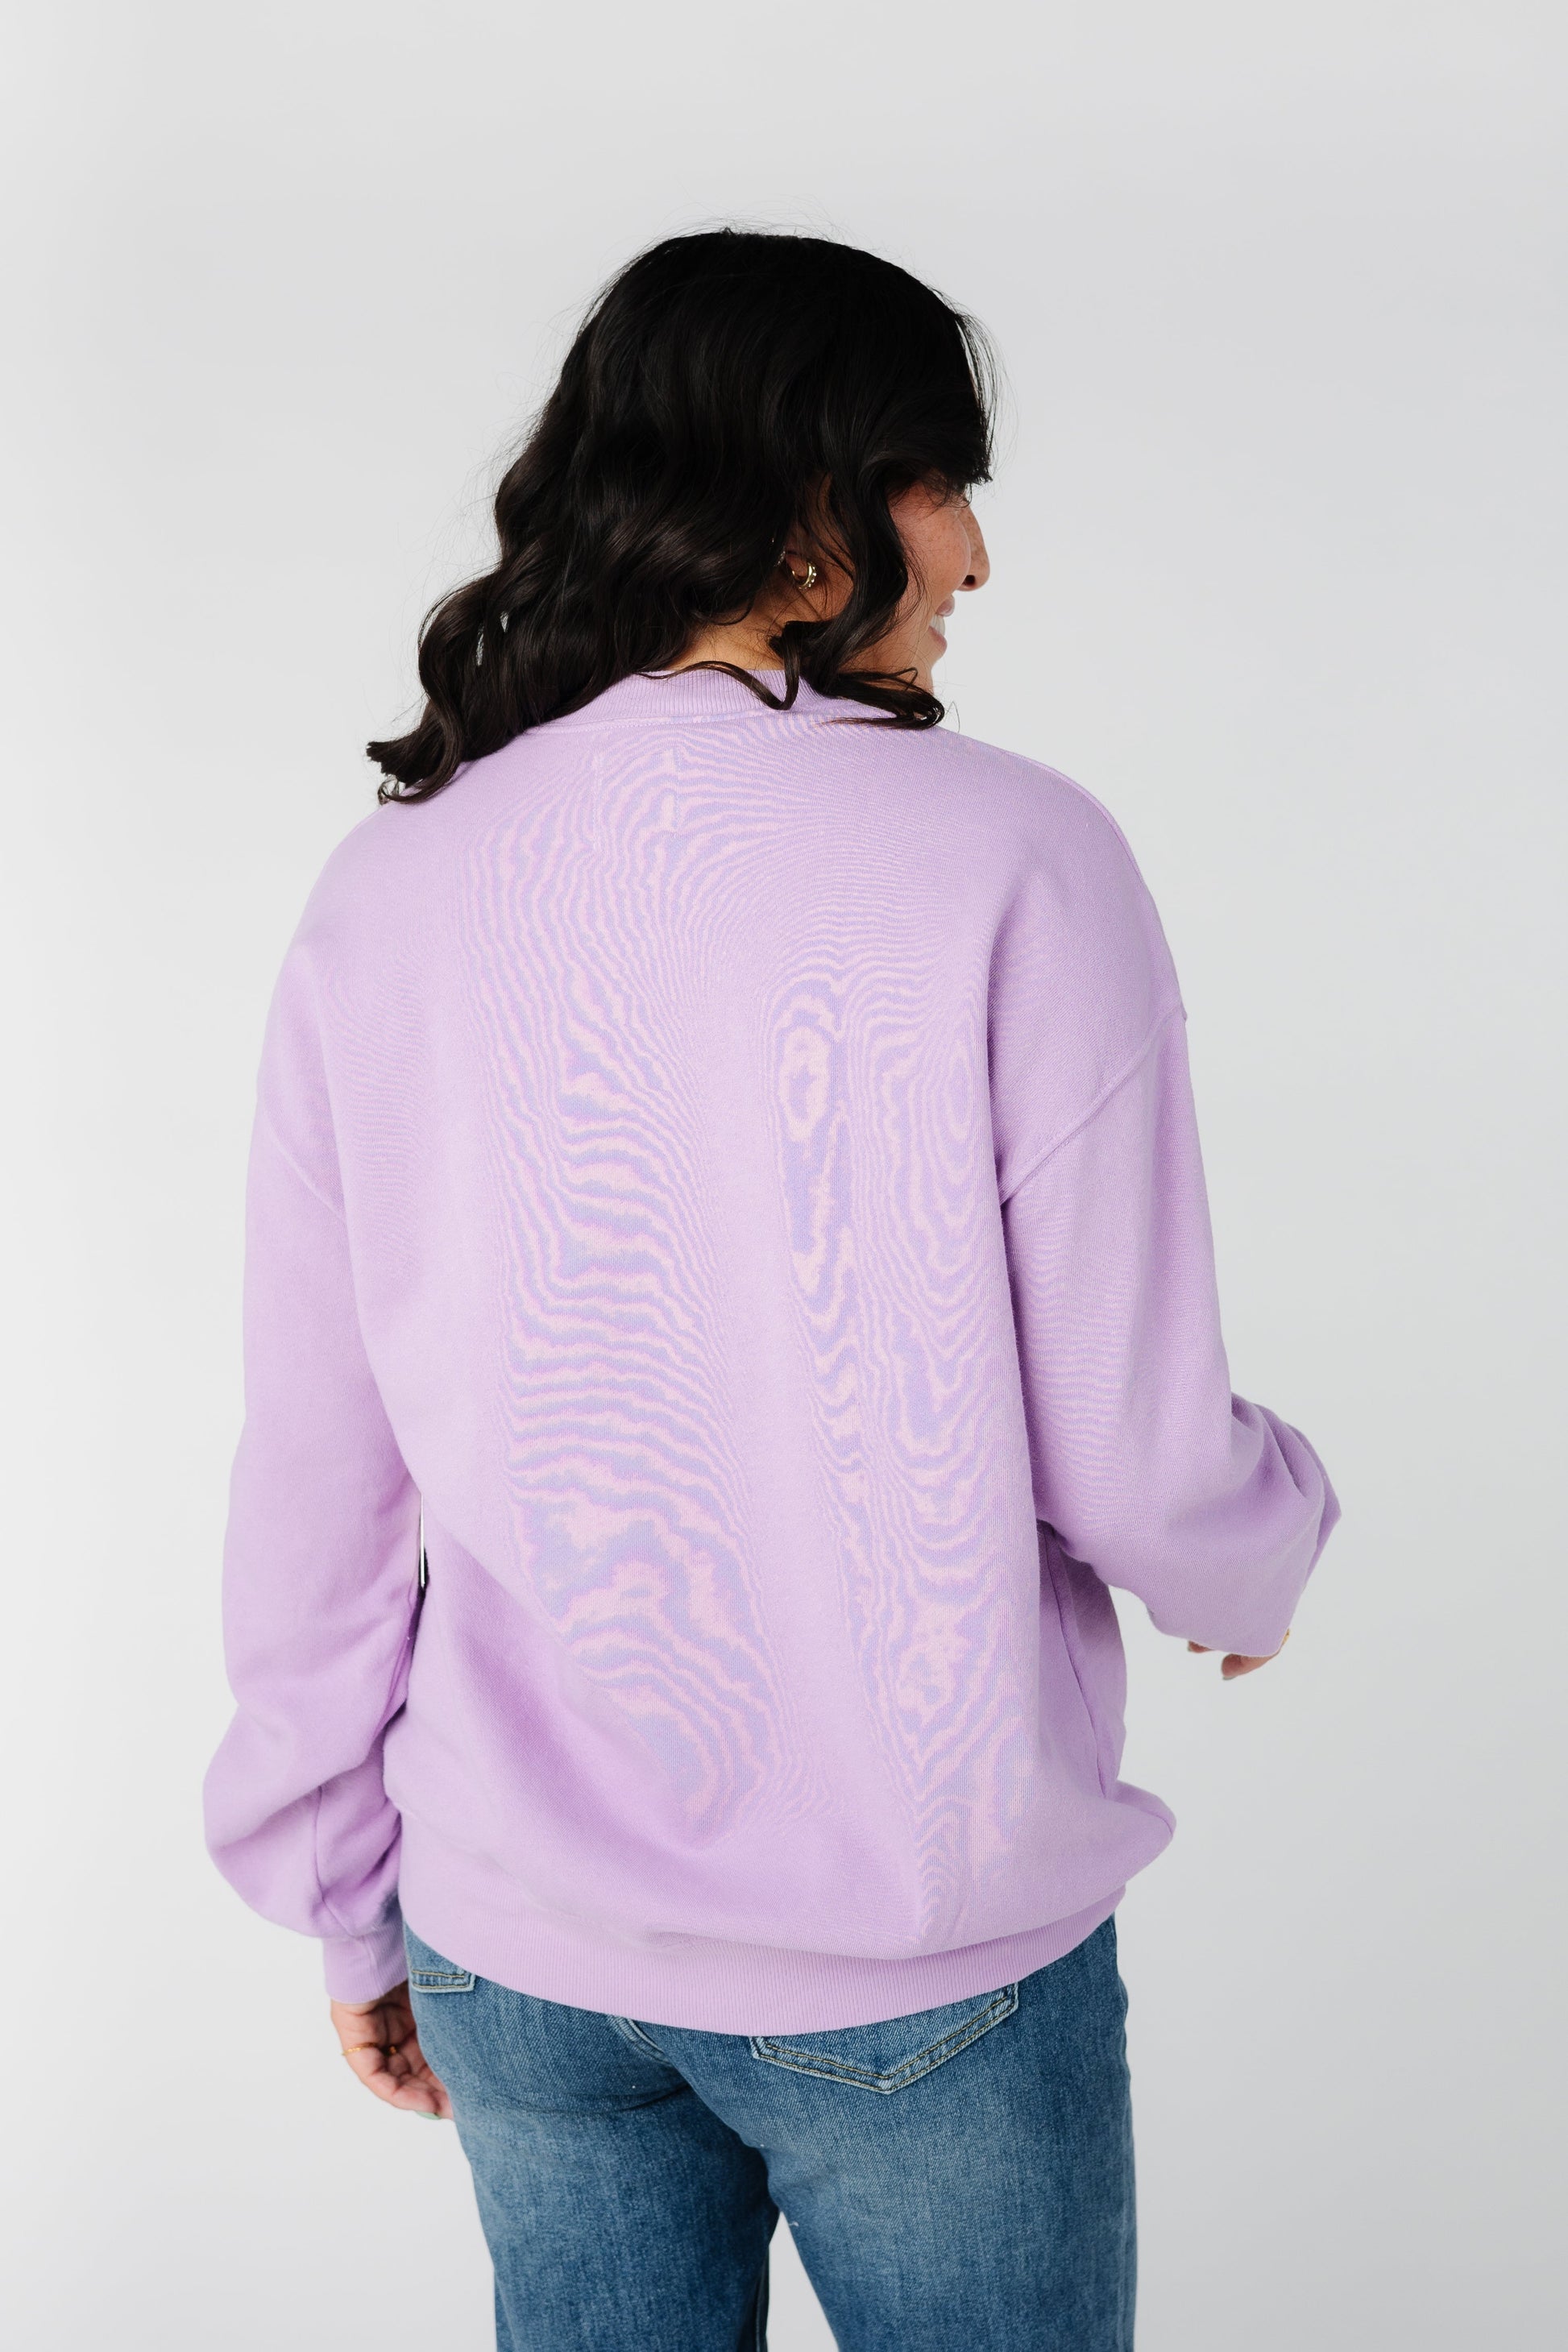 Billabong Ride In Sweatshirt - Lavender WOMEN'S SWEATSHIRT Billabong 